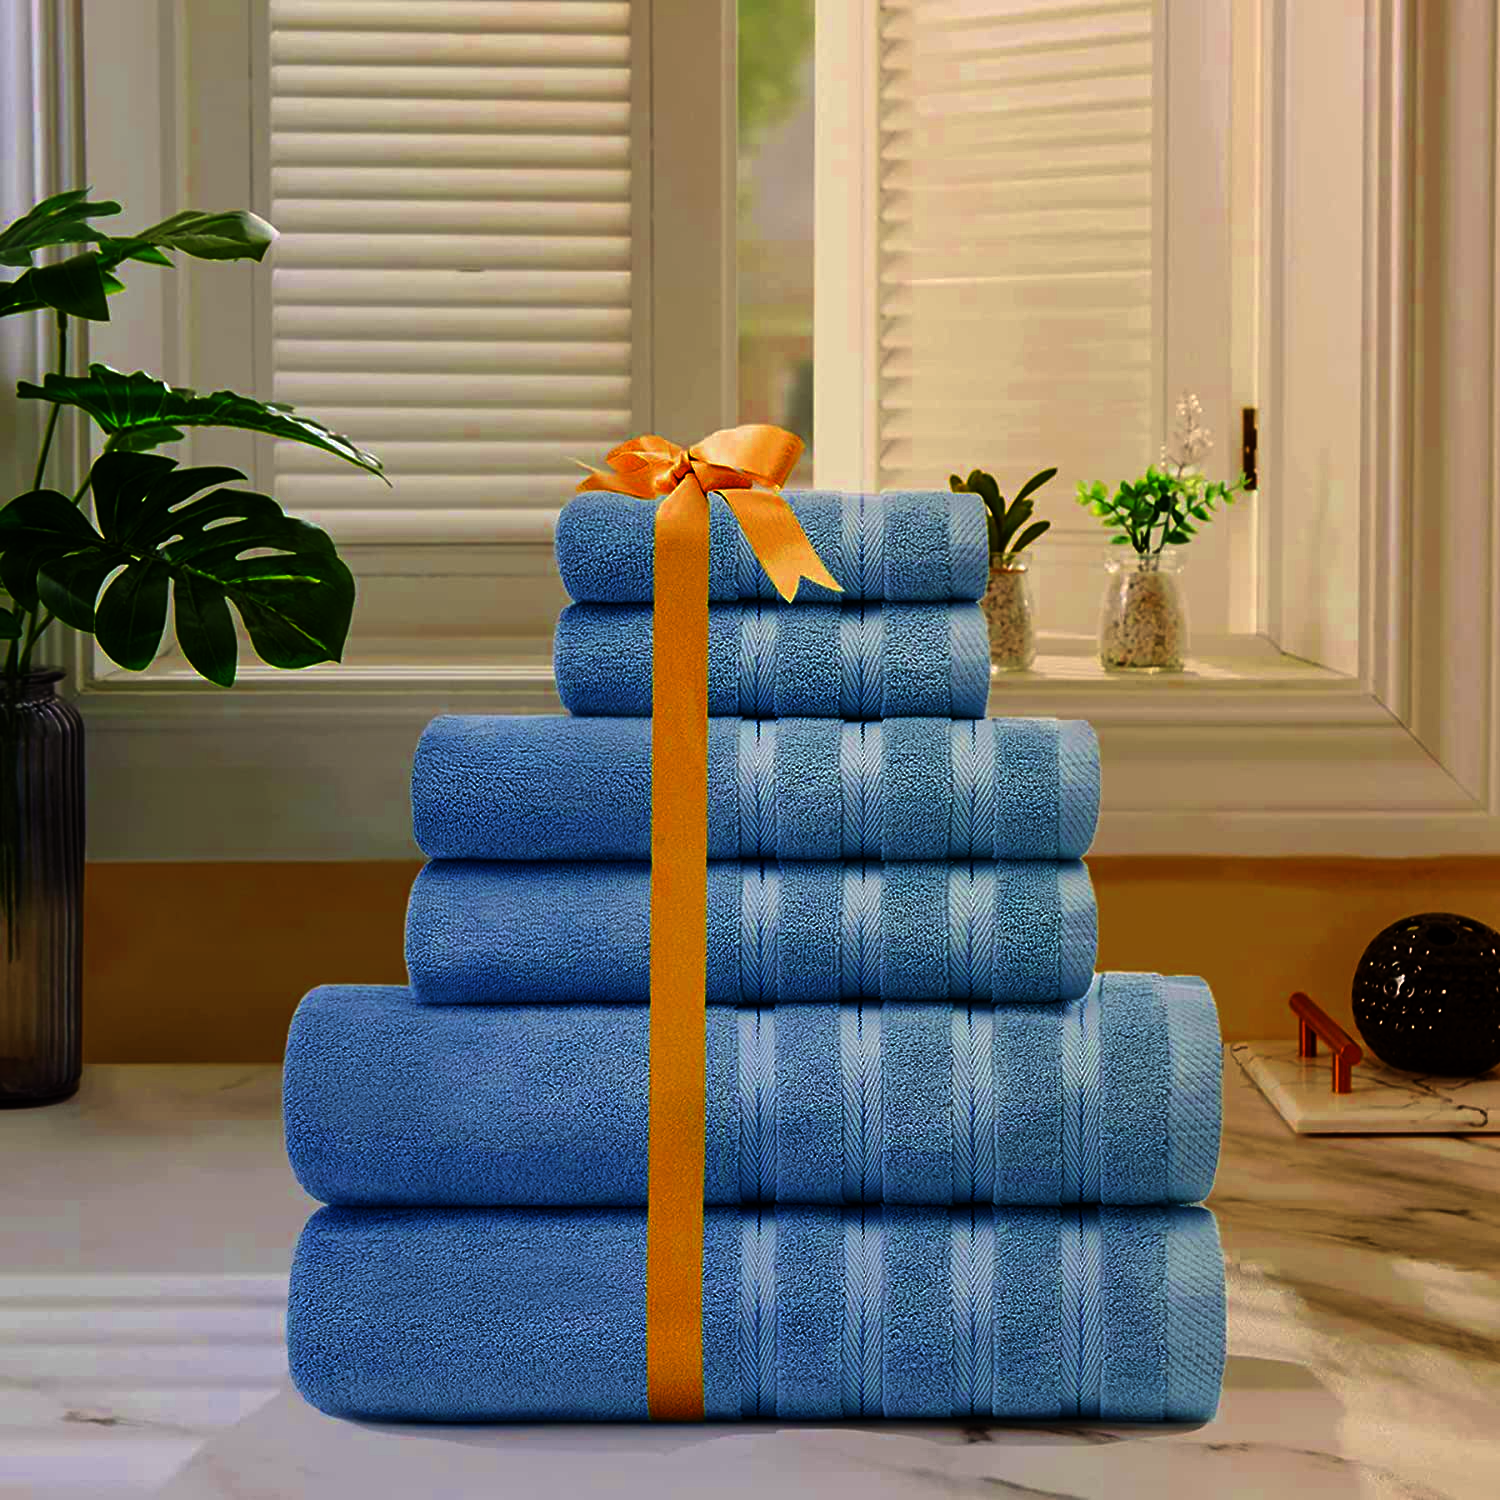 Luxury Premium Quality 8pc Towels Set 100% Egyptian Cotton 800GSM